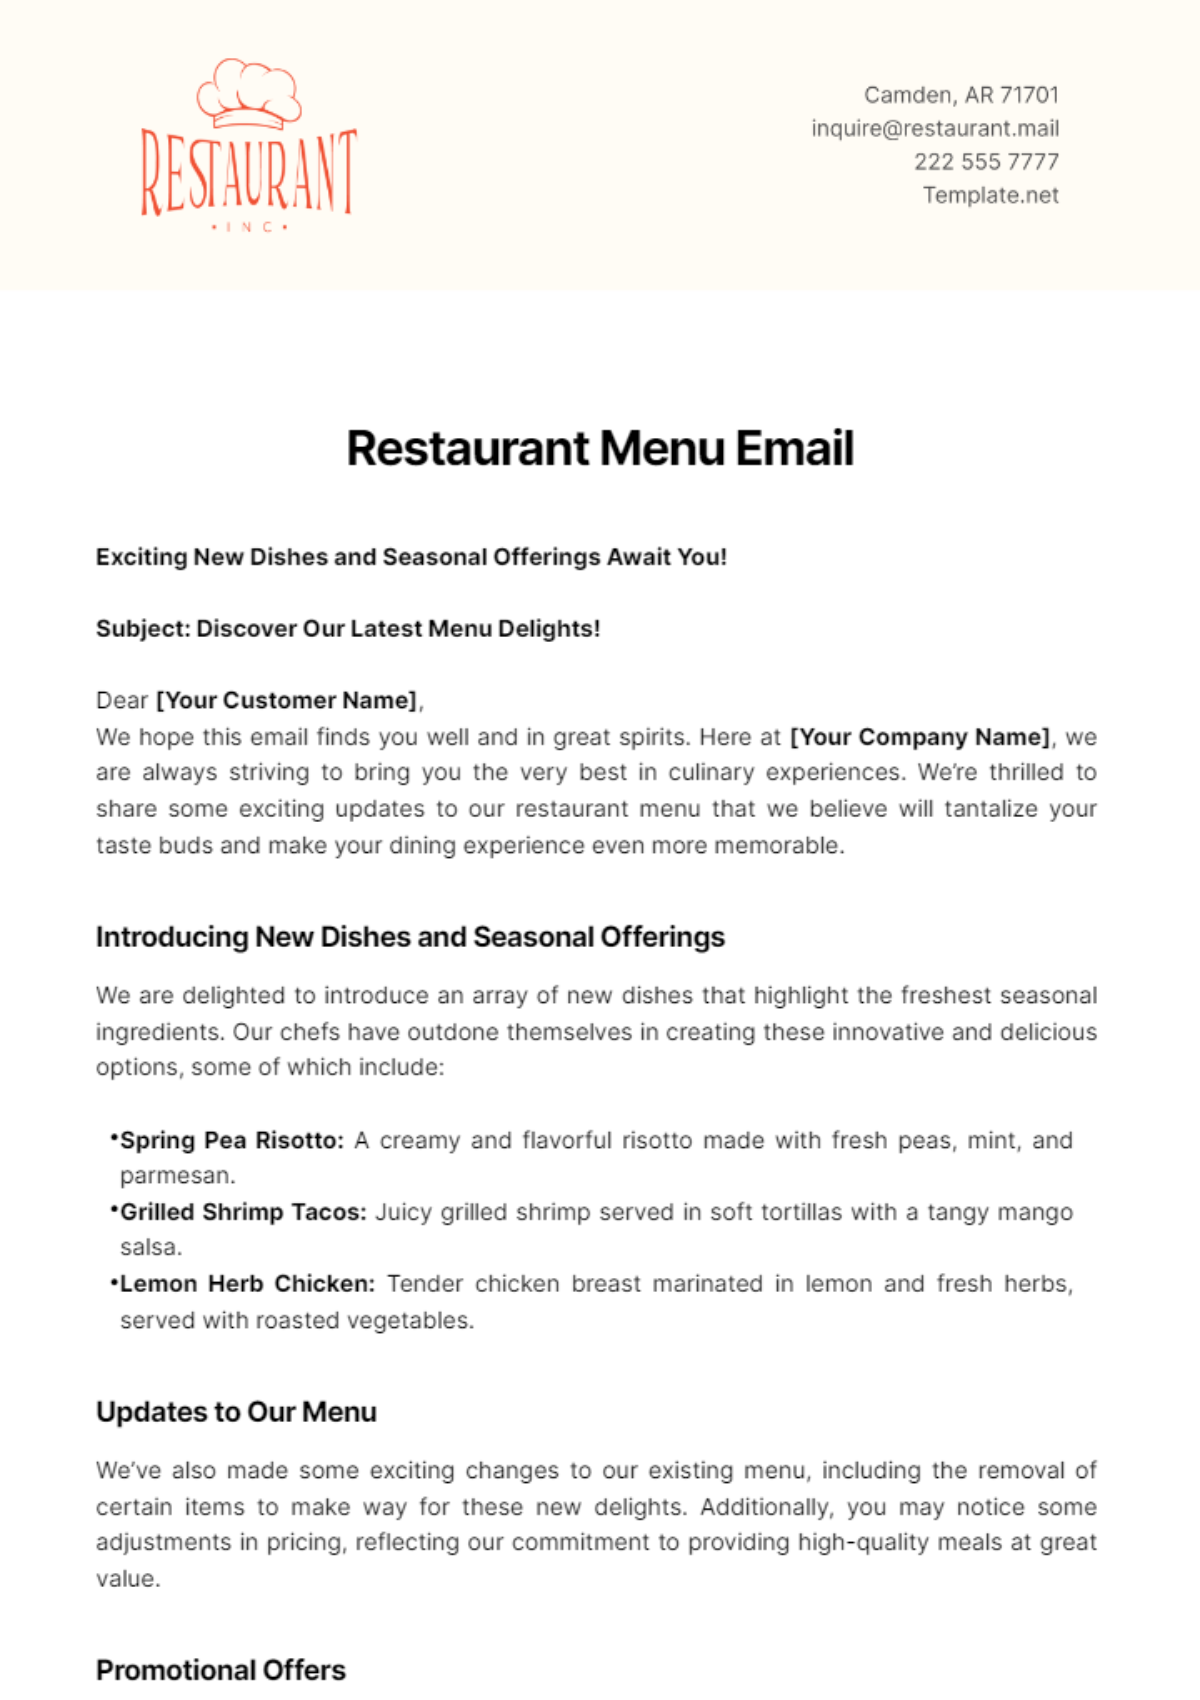 Free Restaurant Menu Email Template